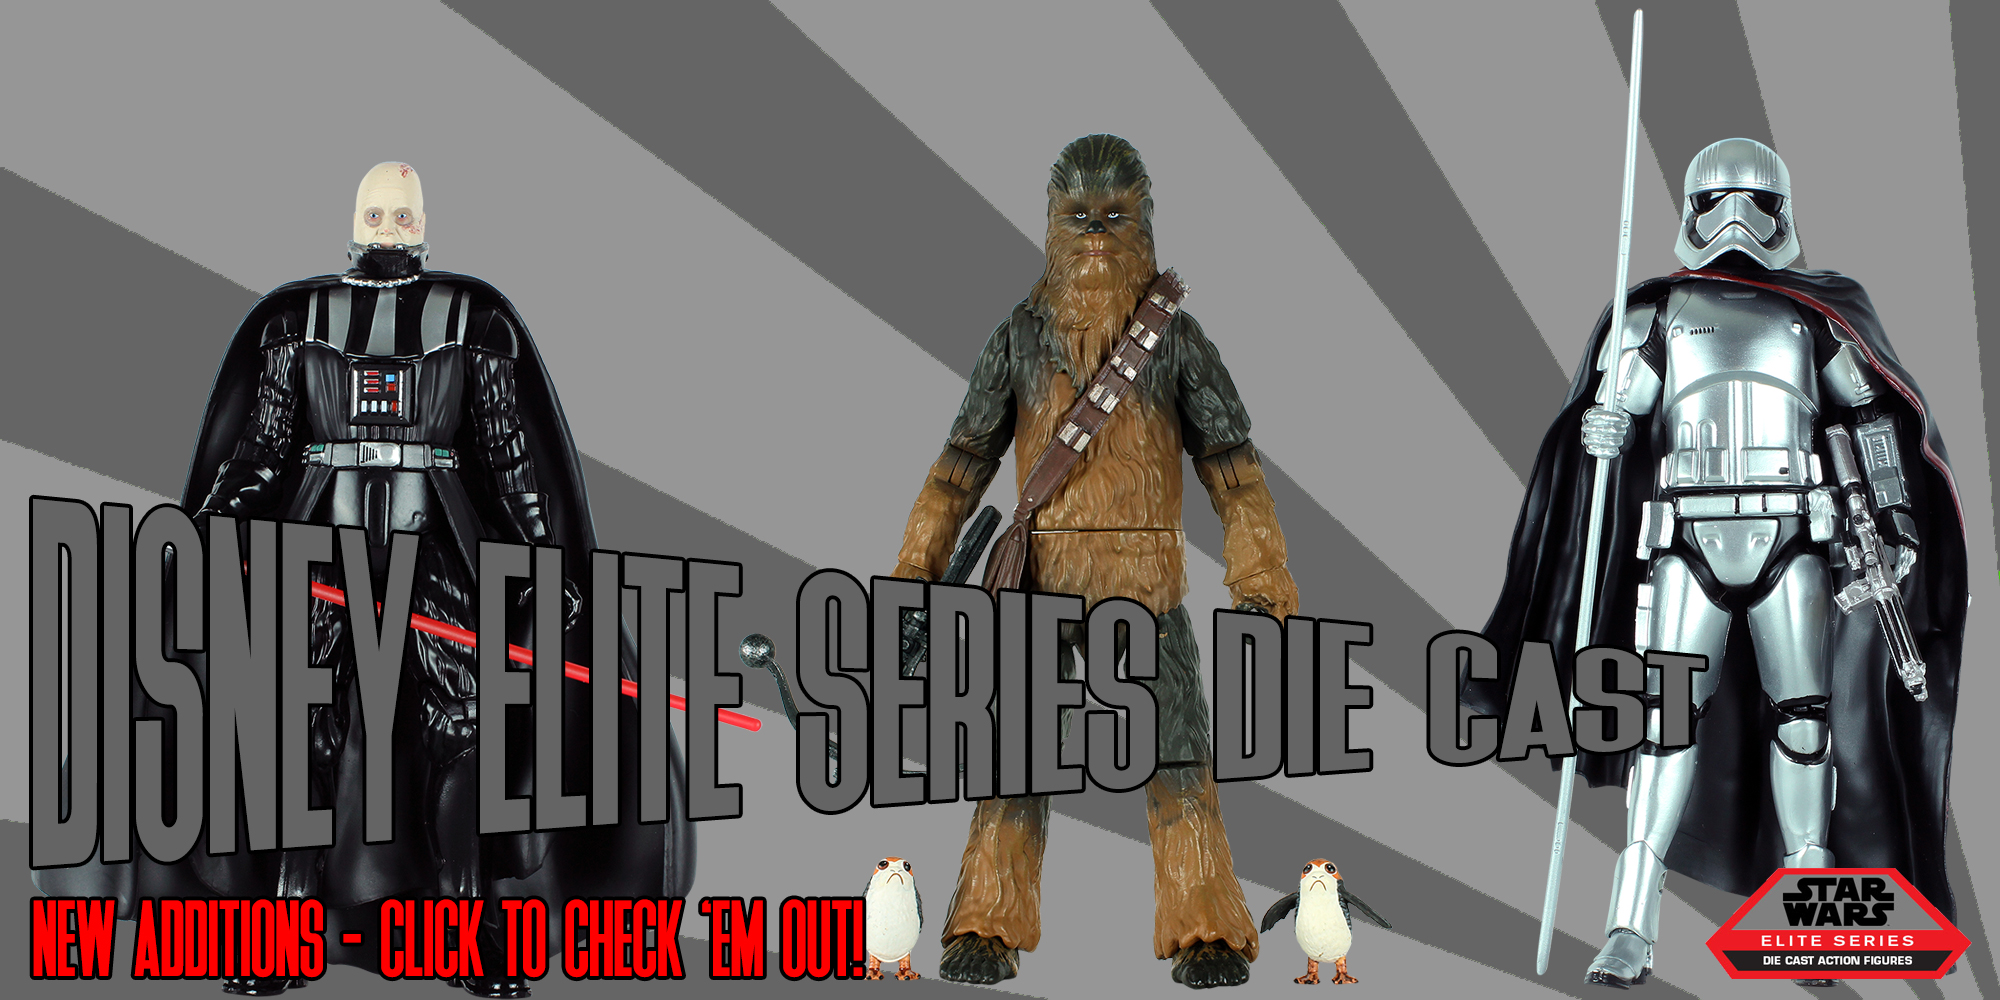 New Additions: Elite Series Darth Vader, Chewbacca, Porgs, Captain Phasma